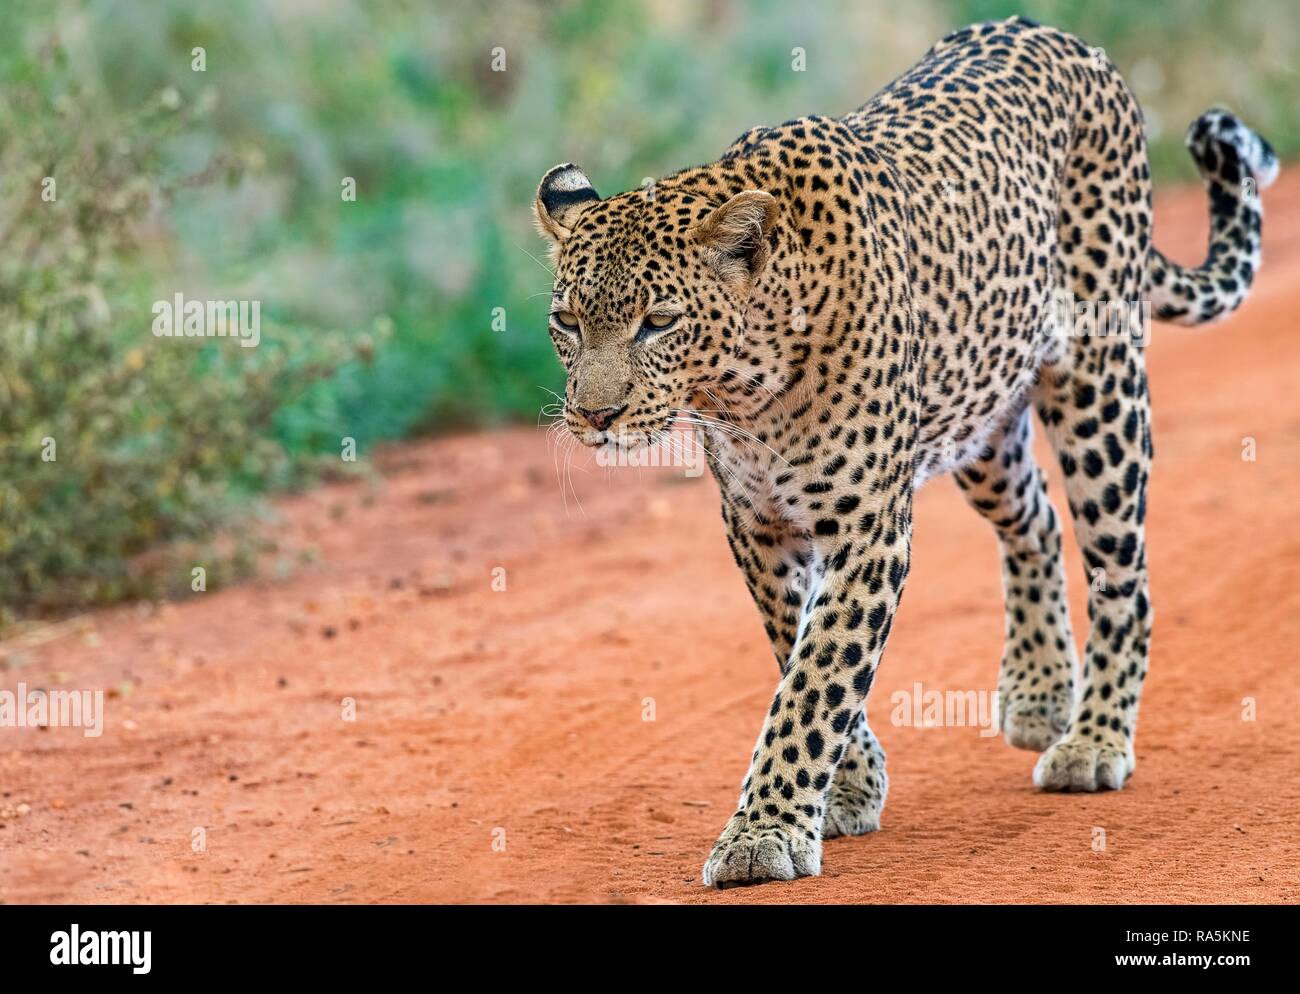 Leopard (Panthera pardus) runs on sand track, Tsavo West National Park, Kenya Stock Photo